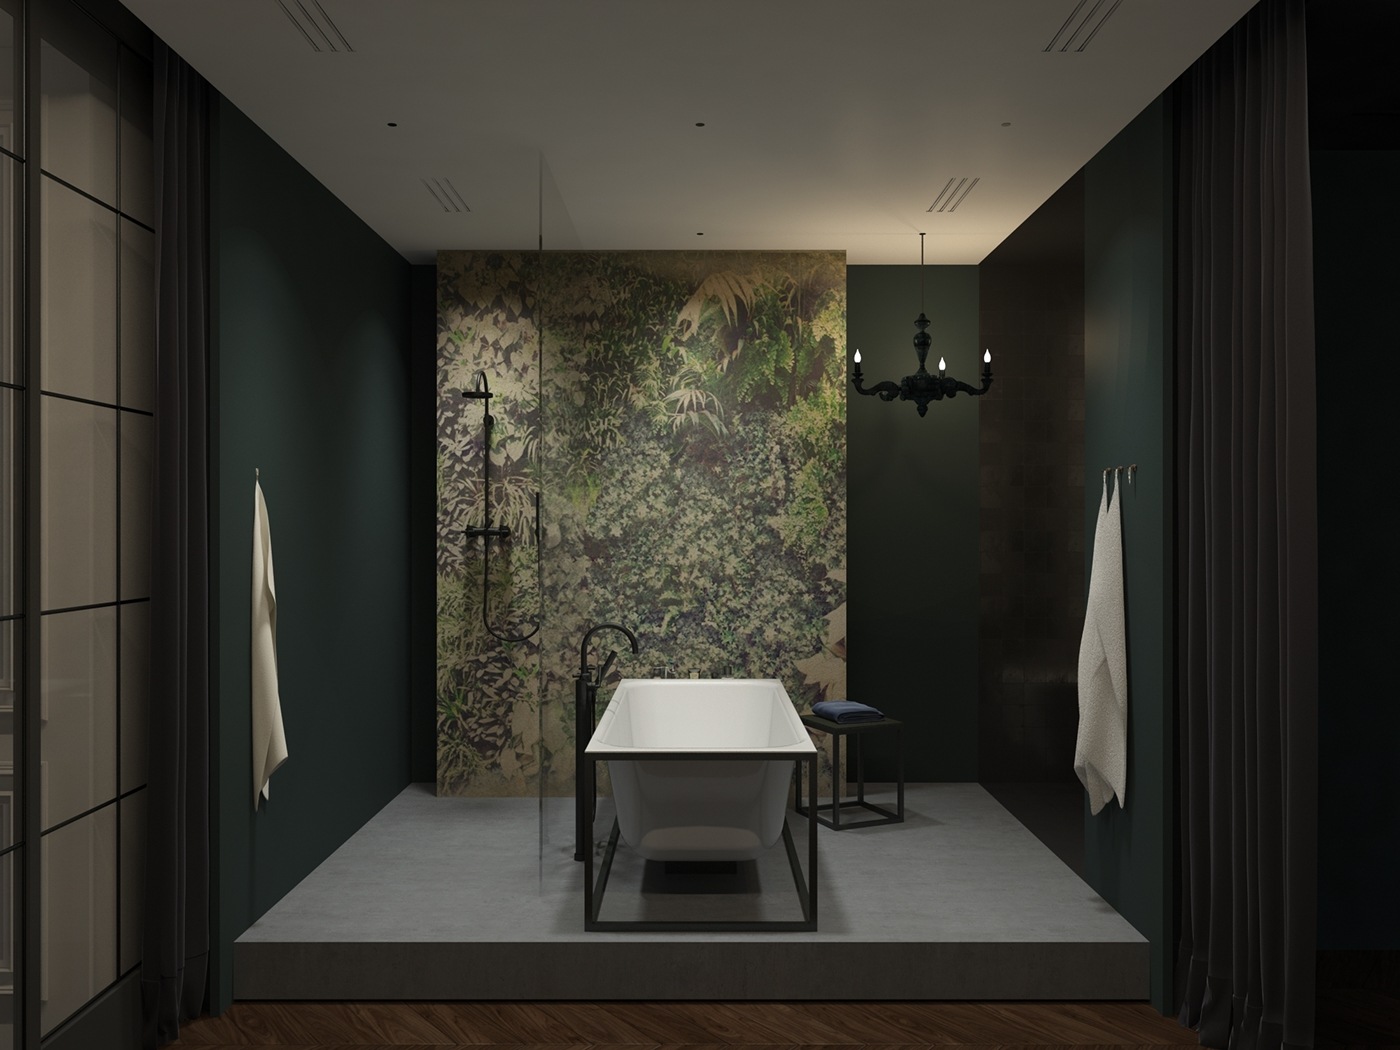 Traditional bathroom design and decor ideas